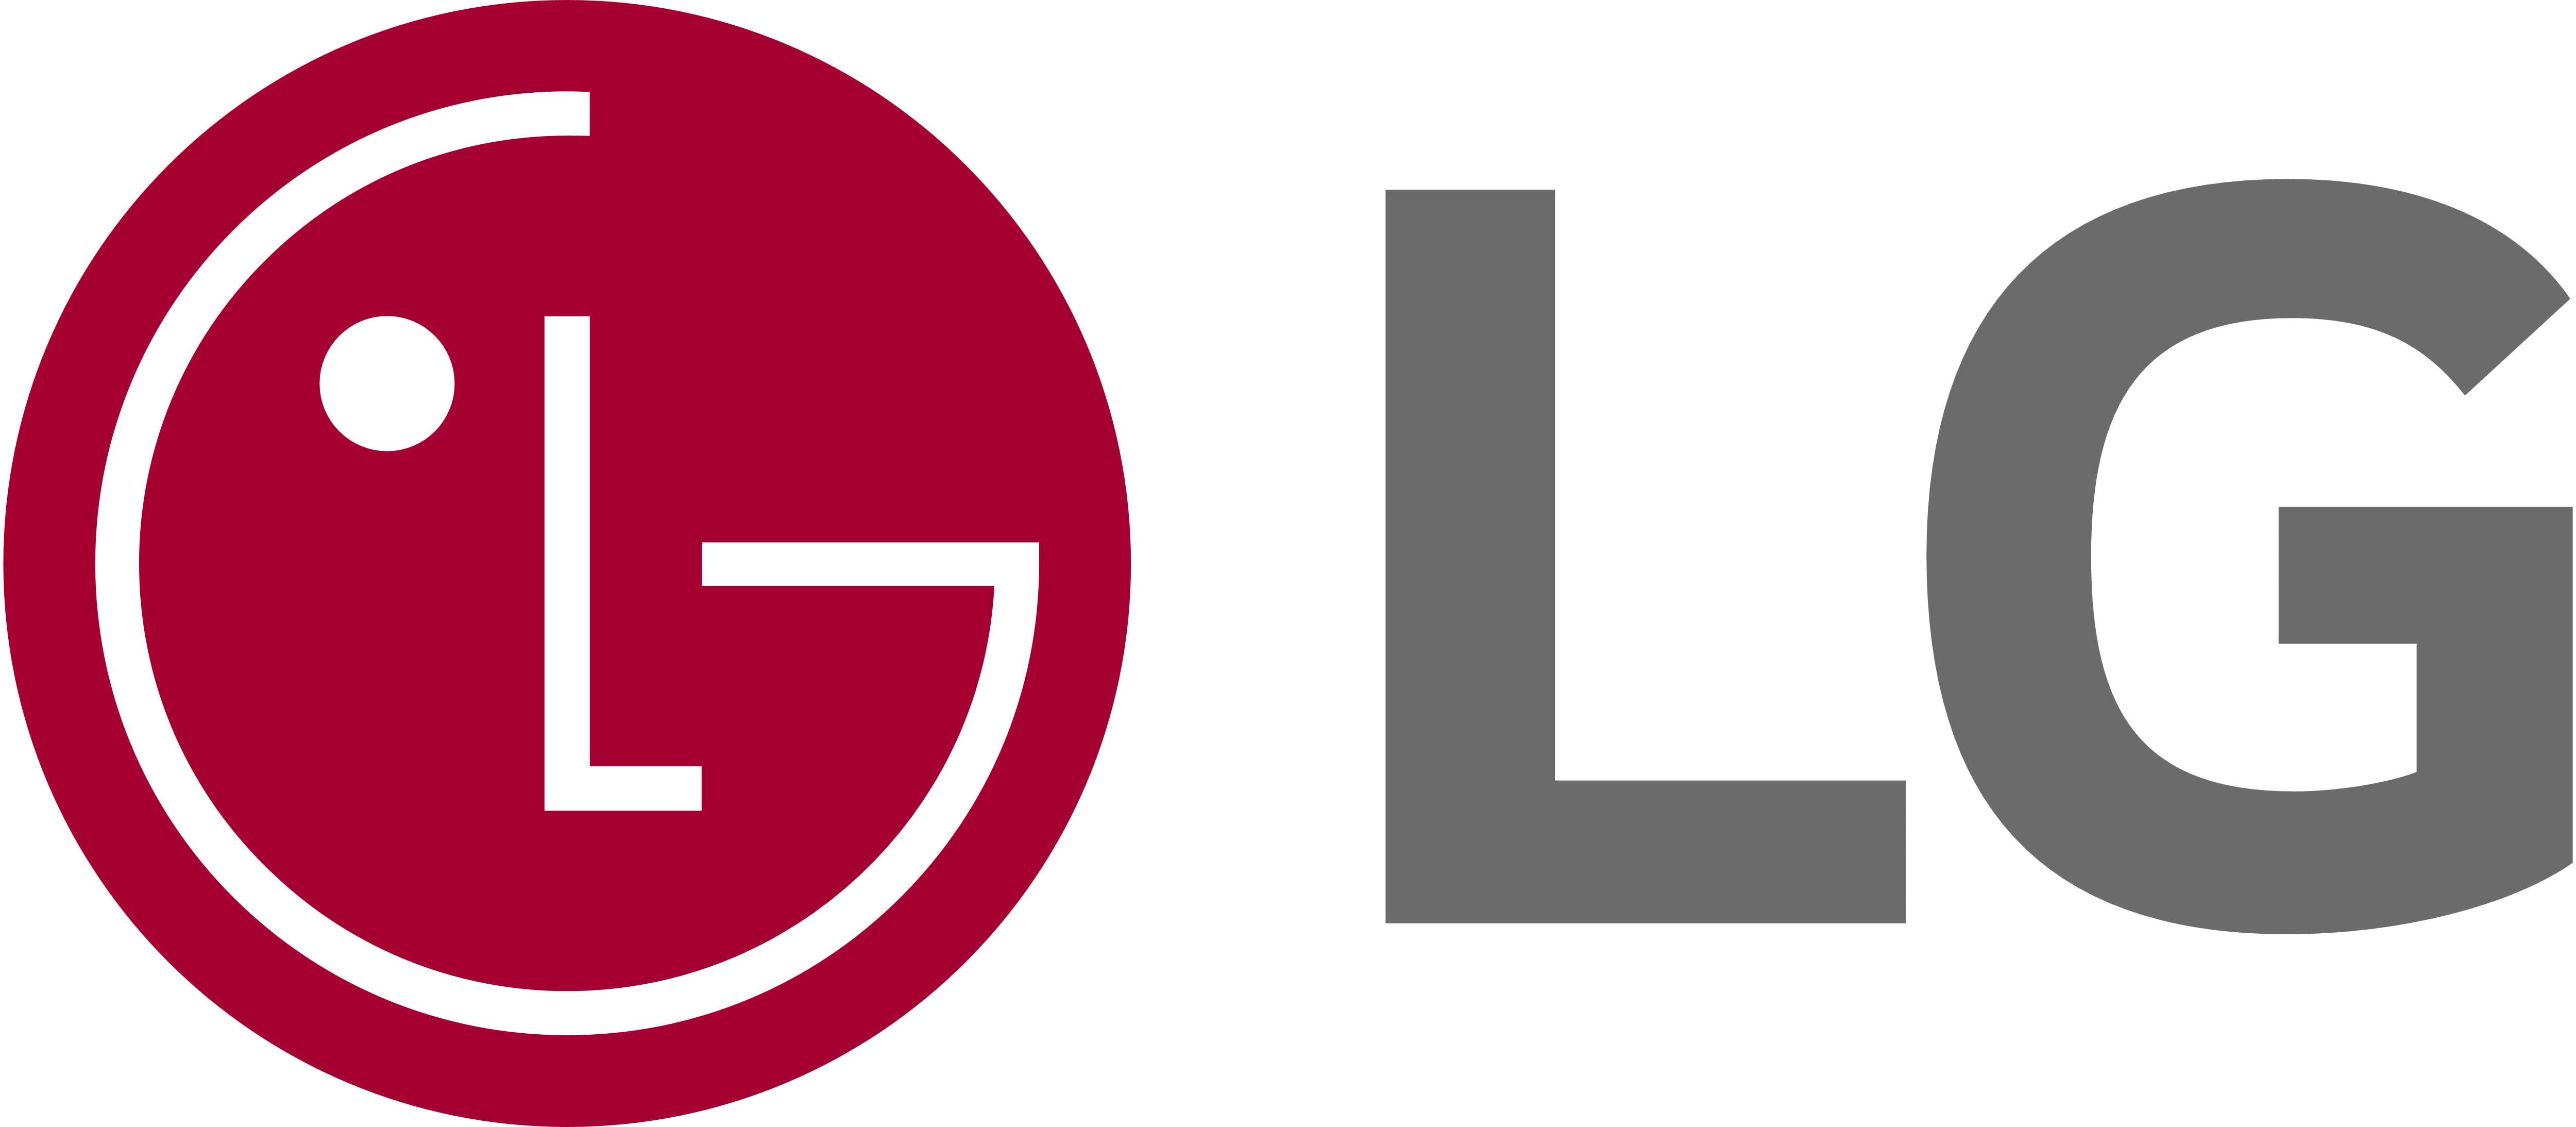 LG Dryer Electrician, Maytag Dryer Service